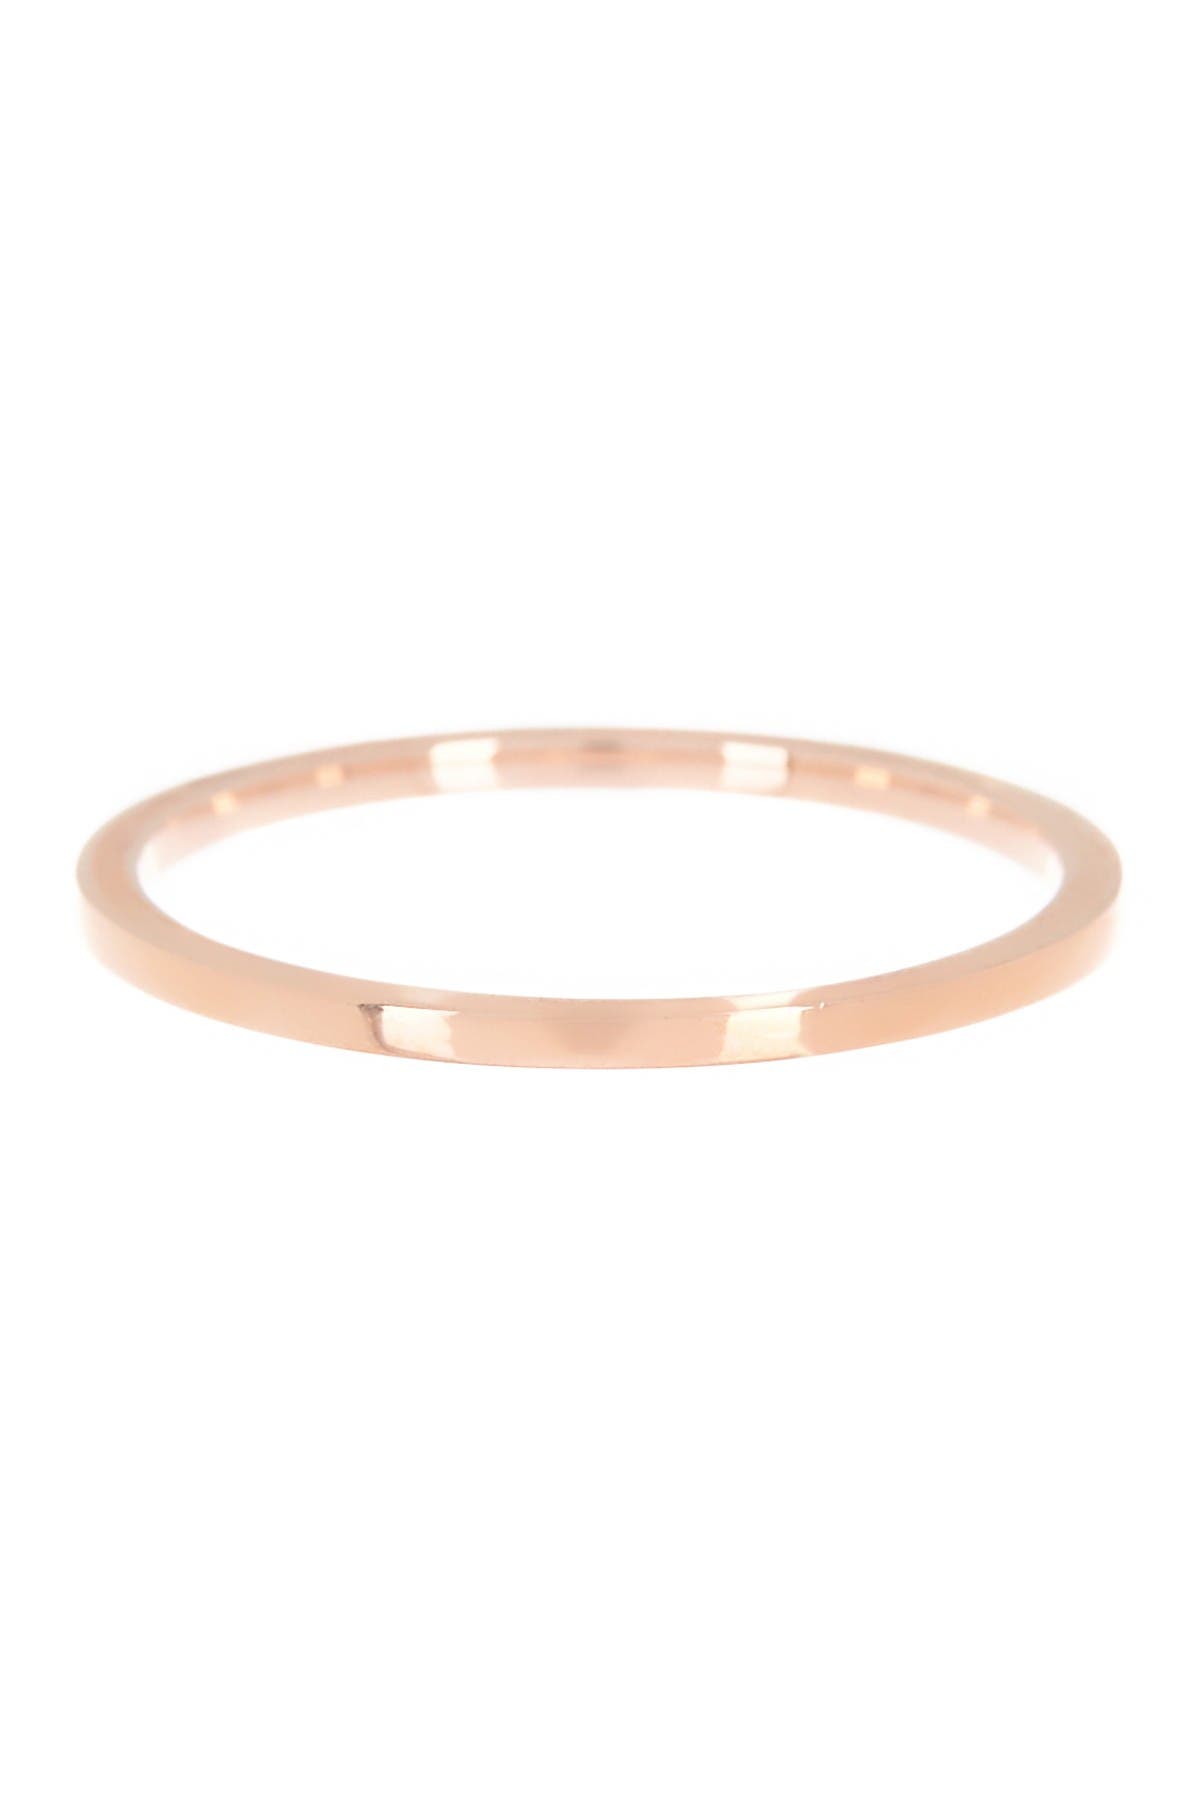 Ef Collection 14k Rose Gold Band Ring